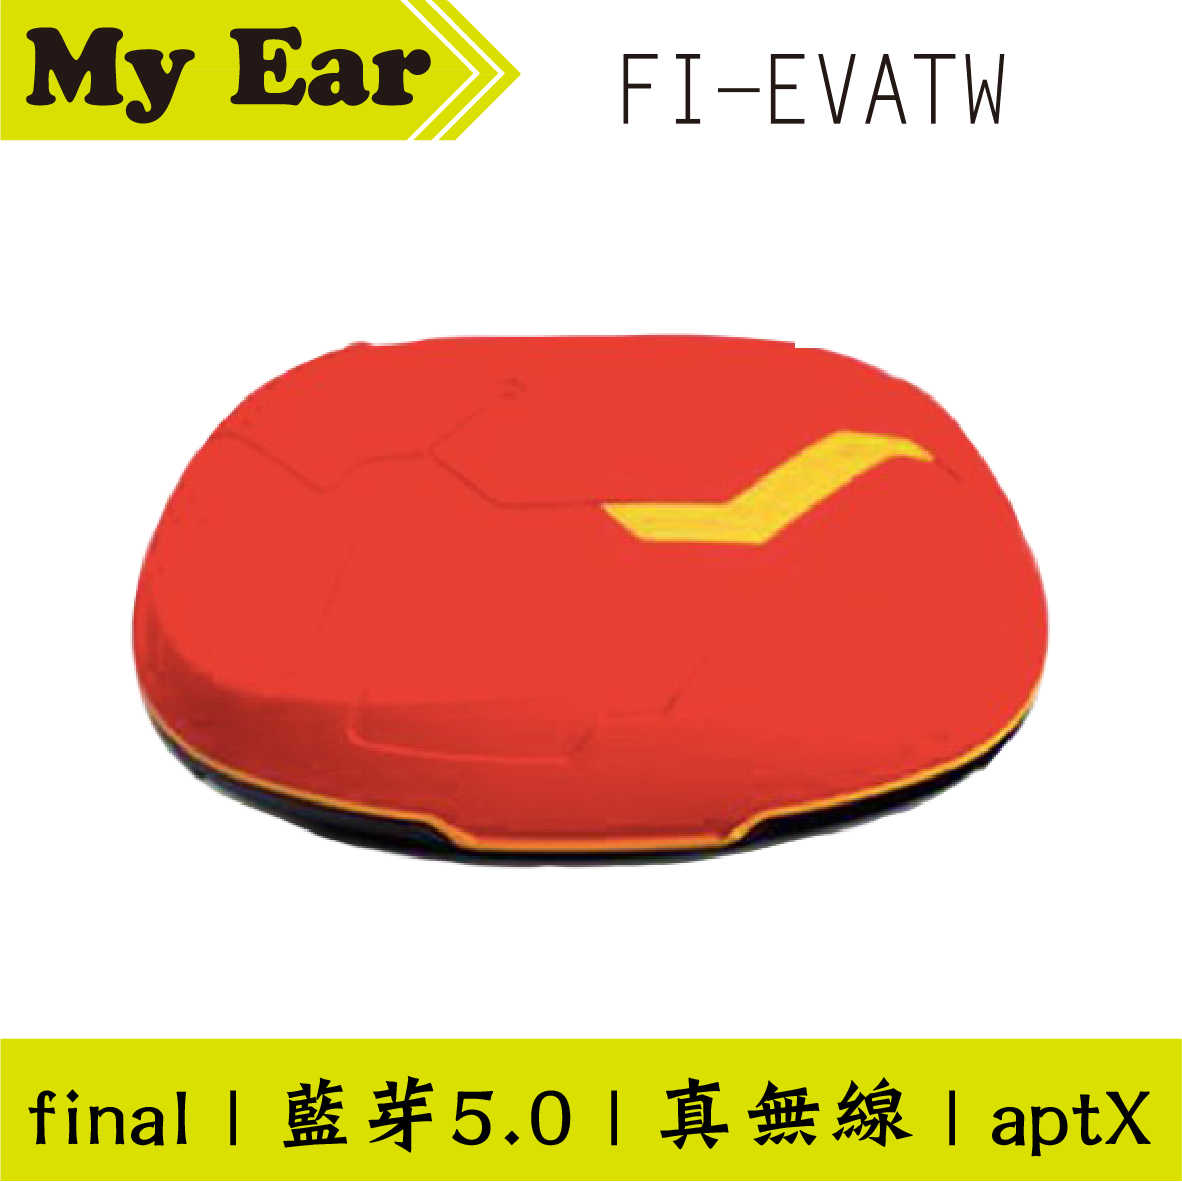 Final FI-EVATW 黑色 NERV 新世紀 EVA 福音戰士 真無線 藍芽 耳機 | My Ear 耳機專門店